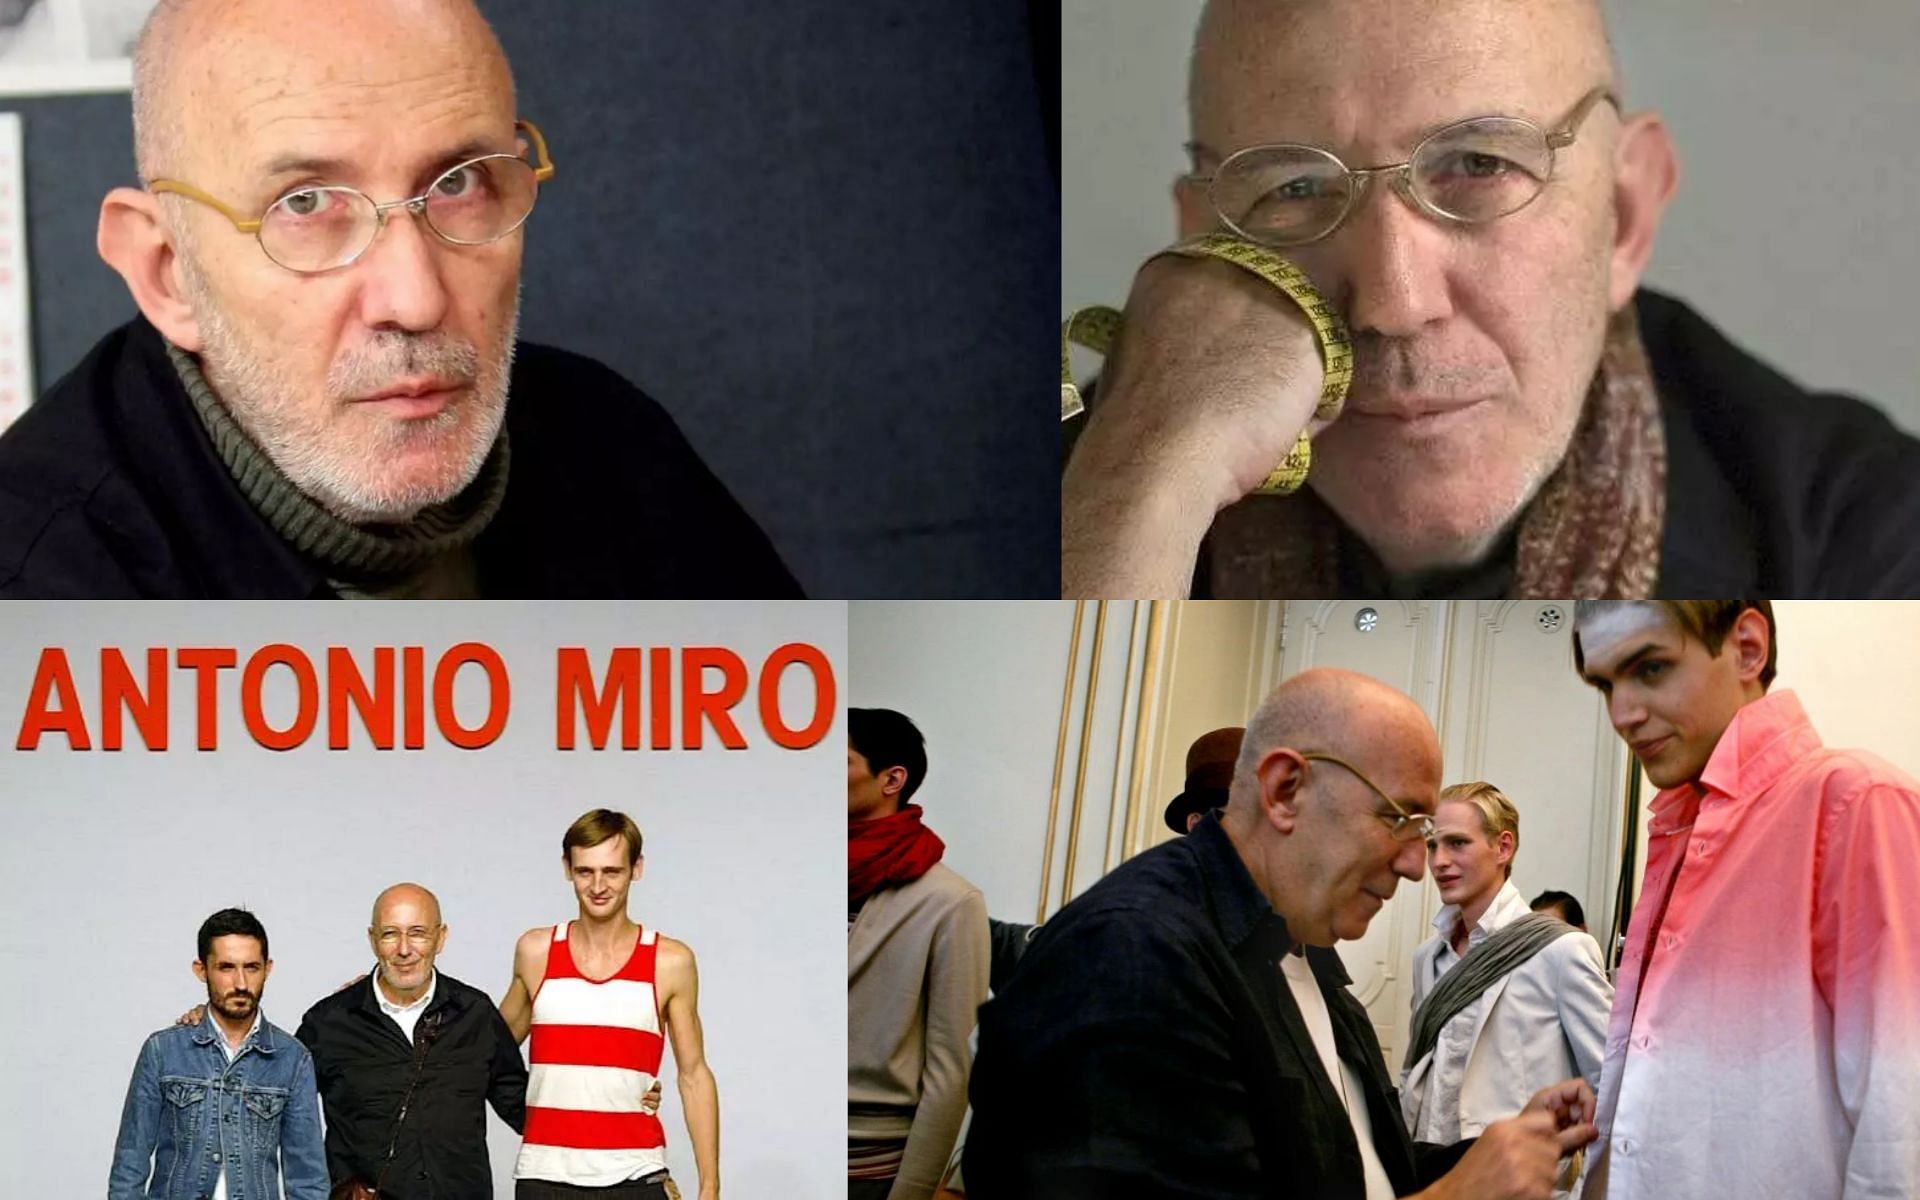 Antonio Miro, a Spanish fashion designer dies at the age of 74 (Image via Sportskeeda)